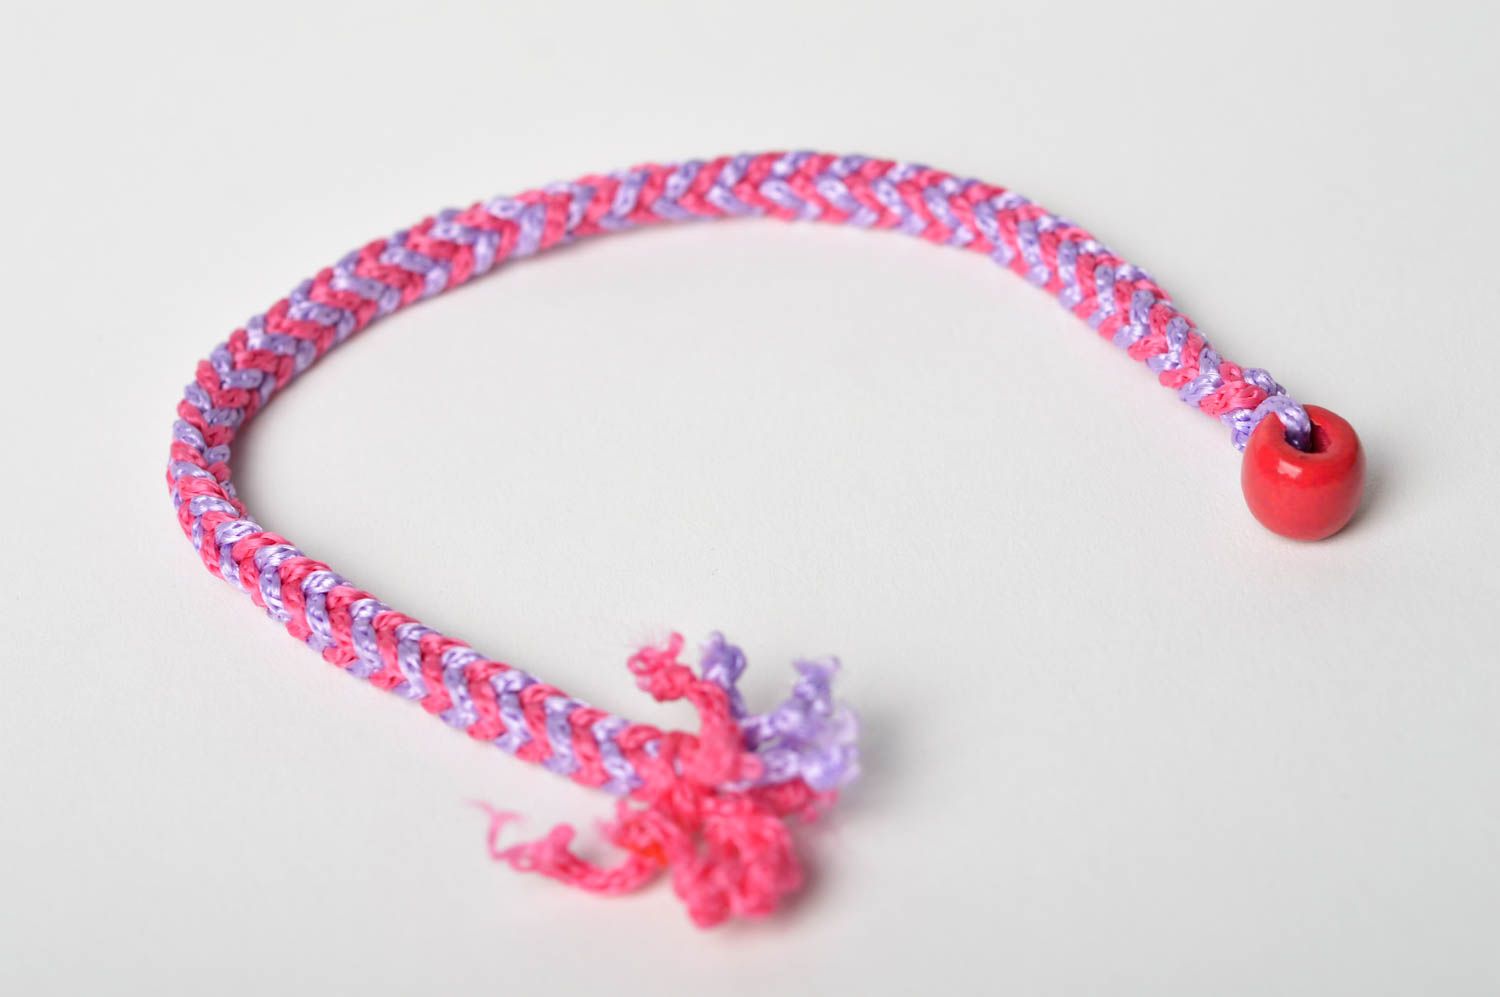 Damen Armband handmade Schmuck für Frauen Schmuck Accessoire rosa lila schön foto 5